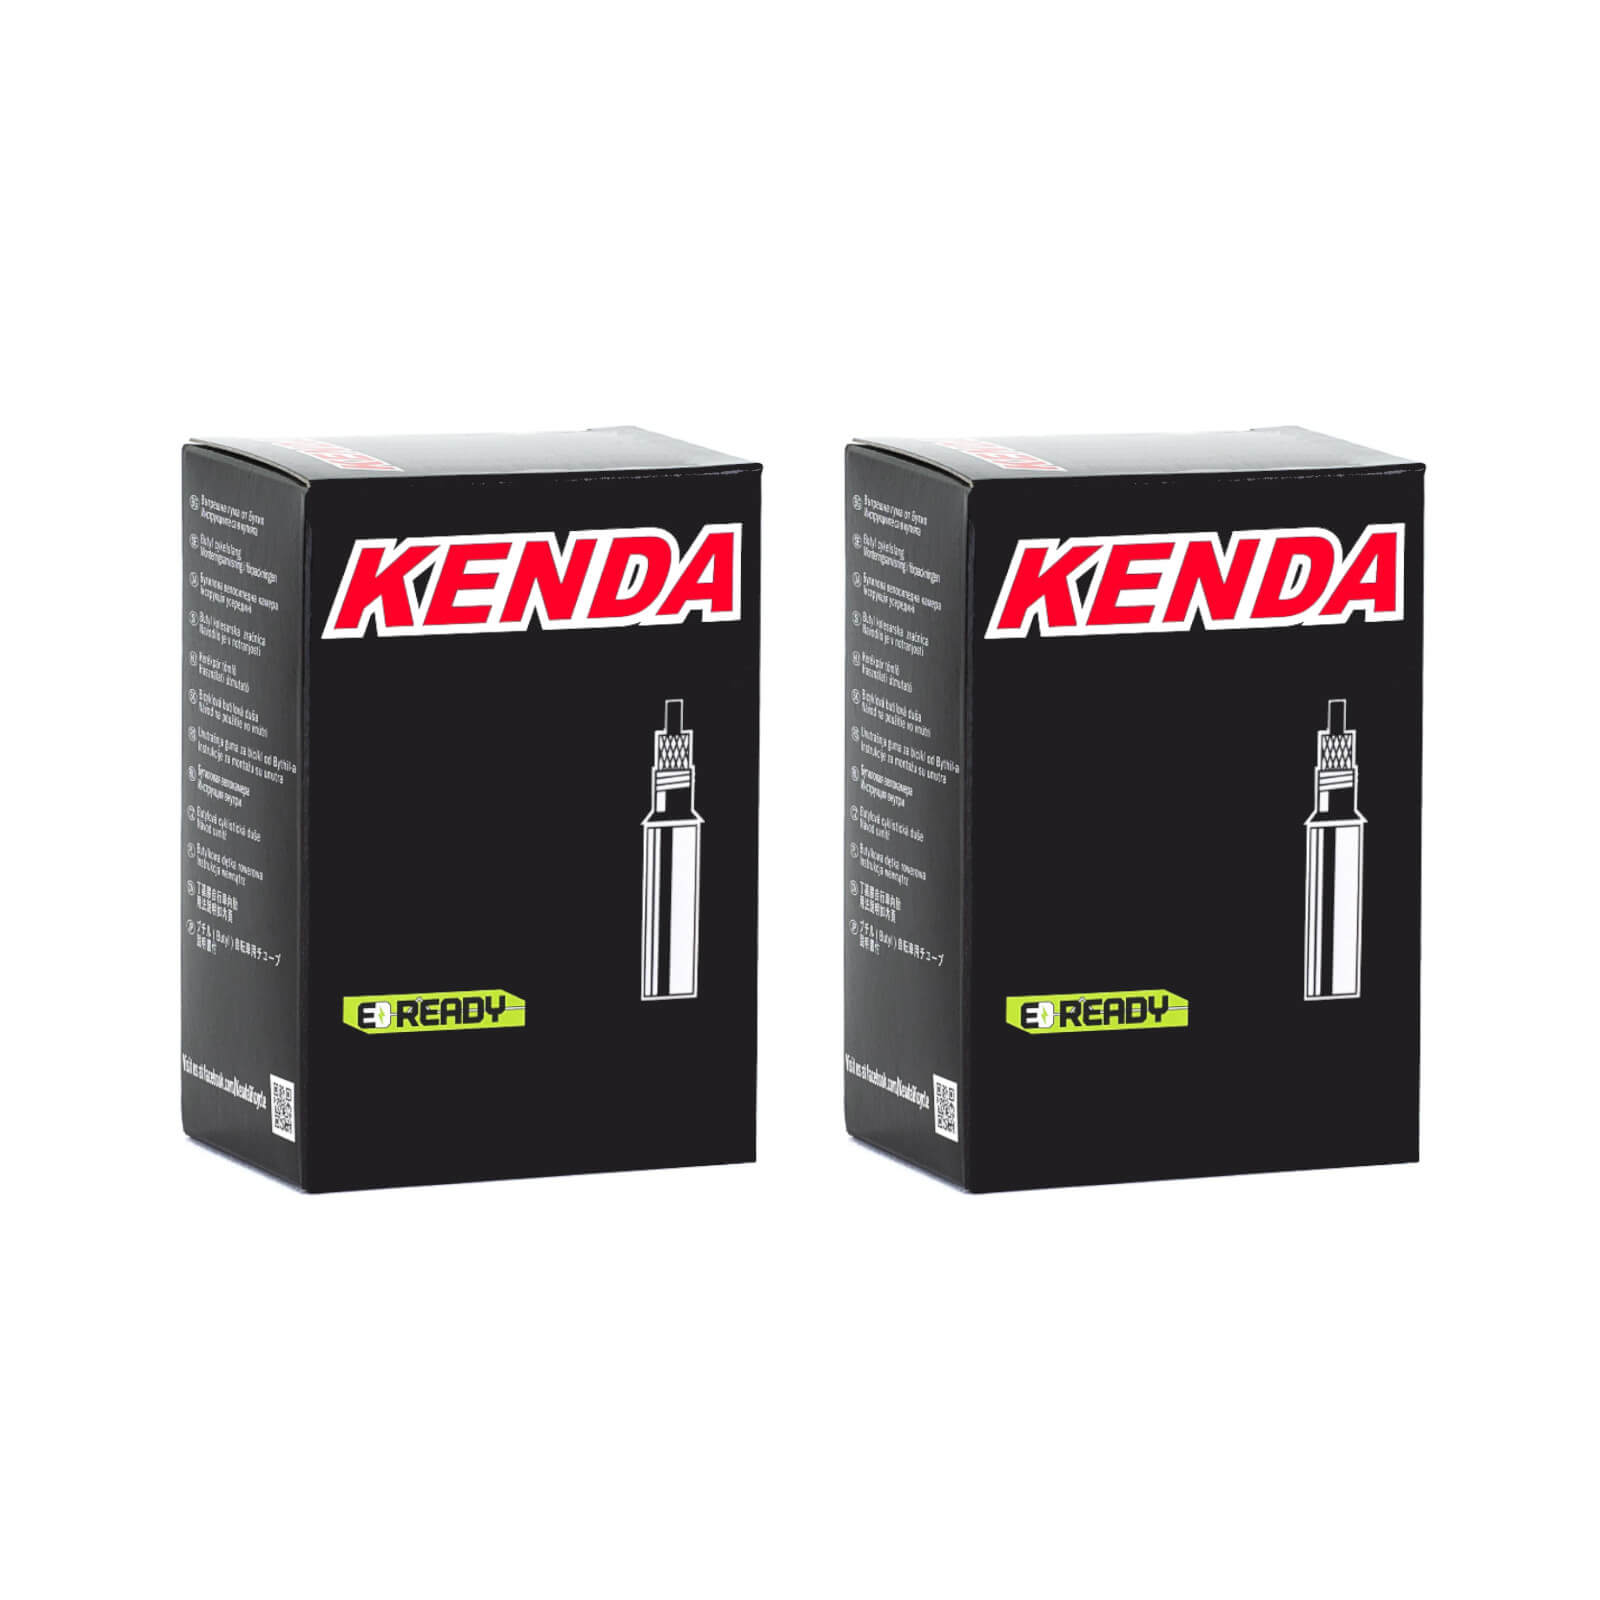 Kenda 27.5x2.0-2.4" 27.5 Inch Presta Valve Bike Inner Tube Pack of 2